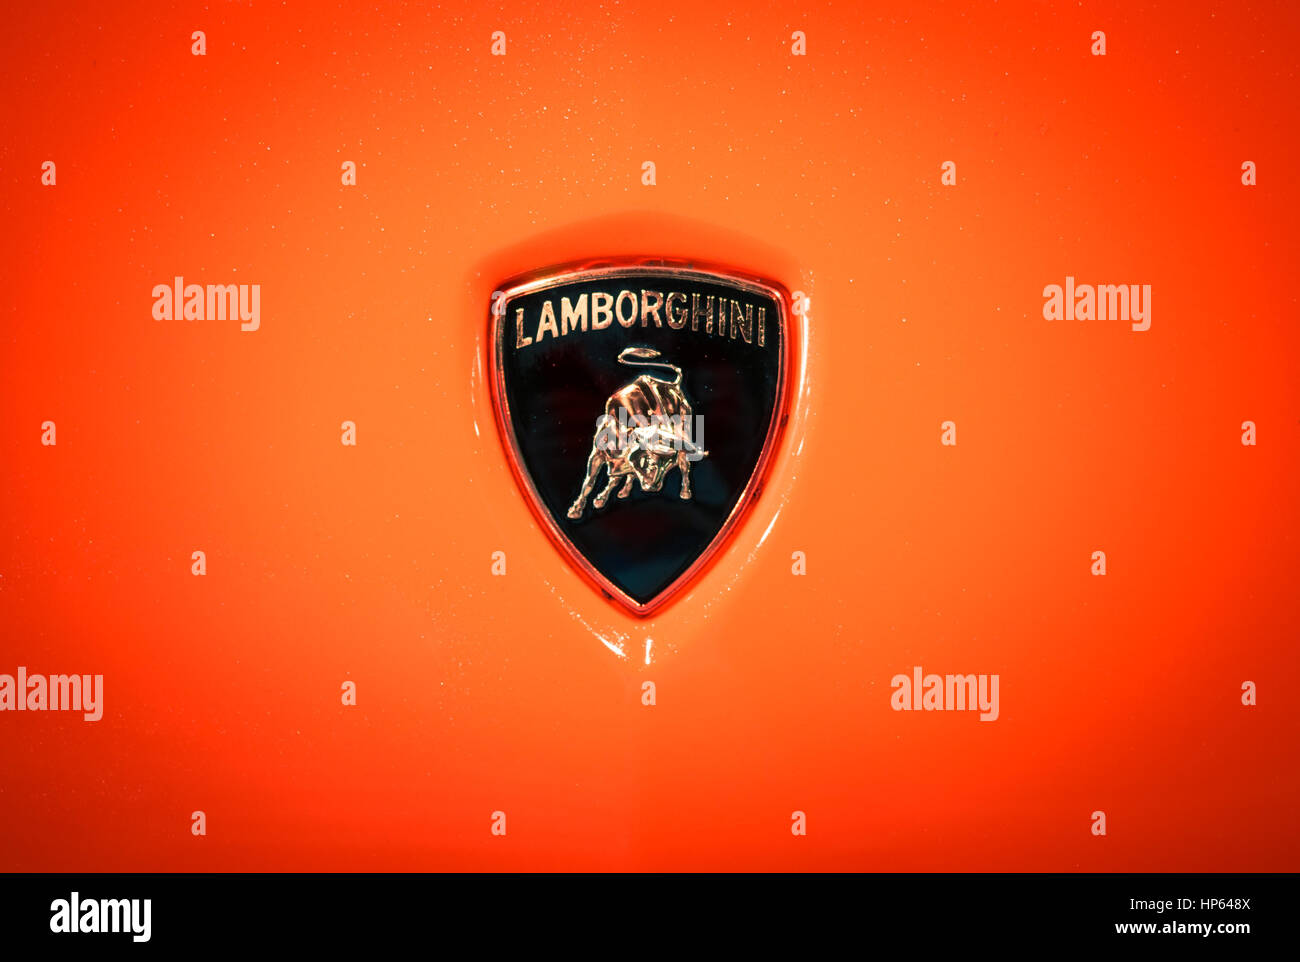 Lamborghini bull logo hi-res stock photography and images - Alamy